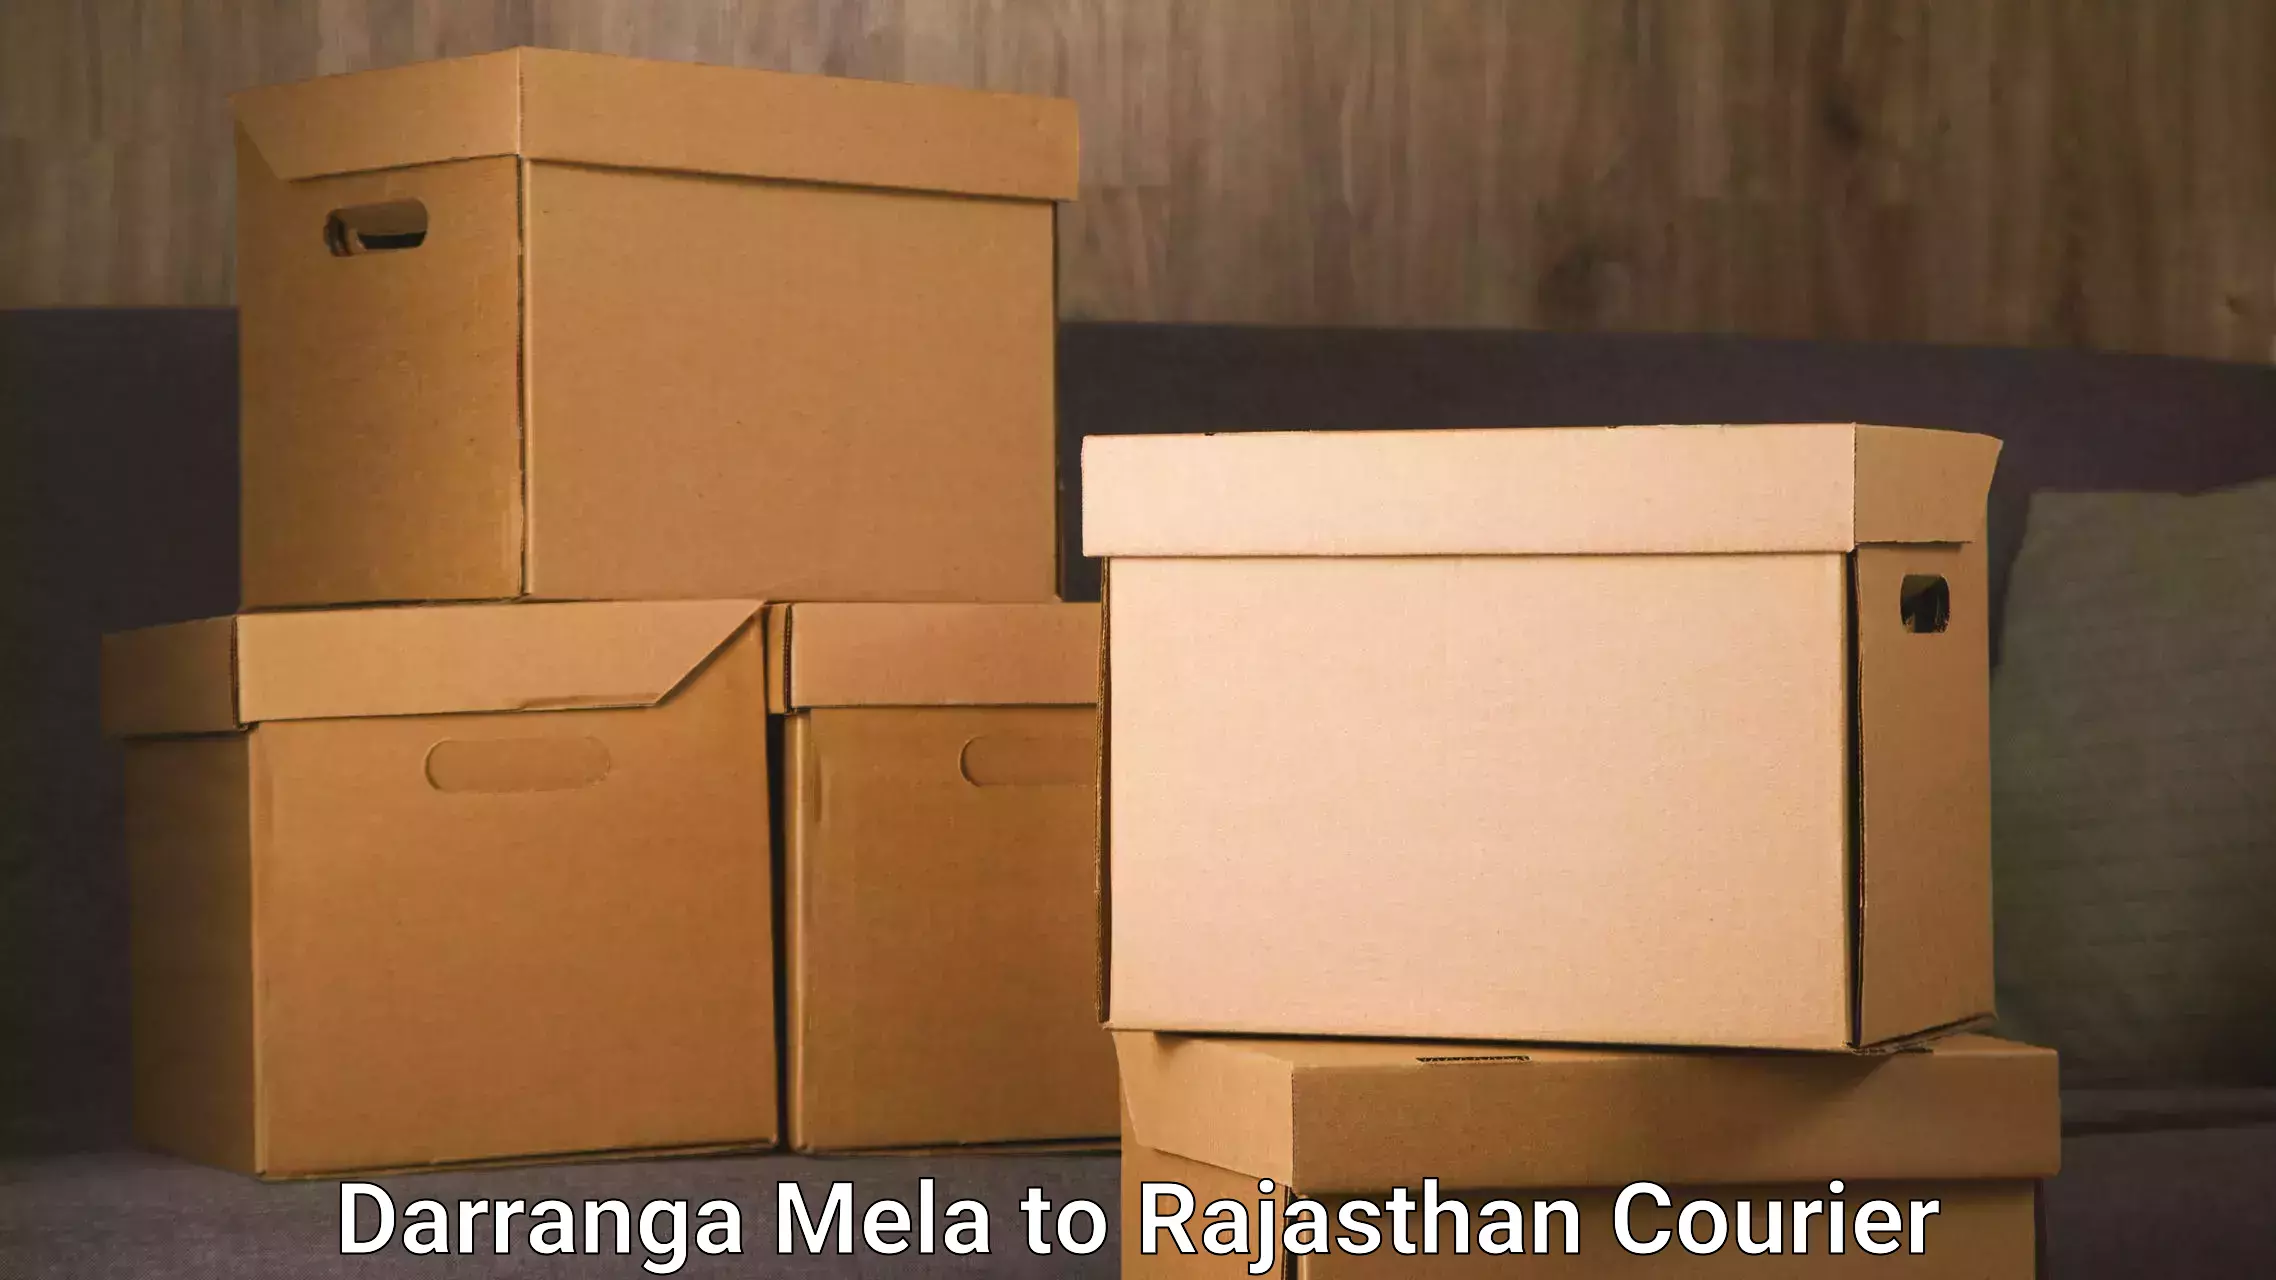 Reliable delivery network Darranga Mela to Sagwara